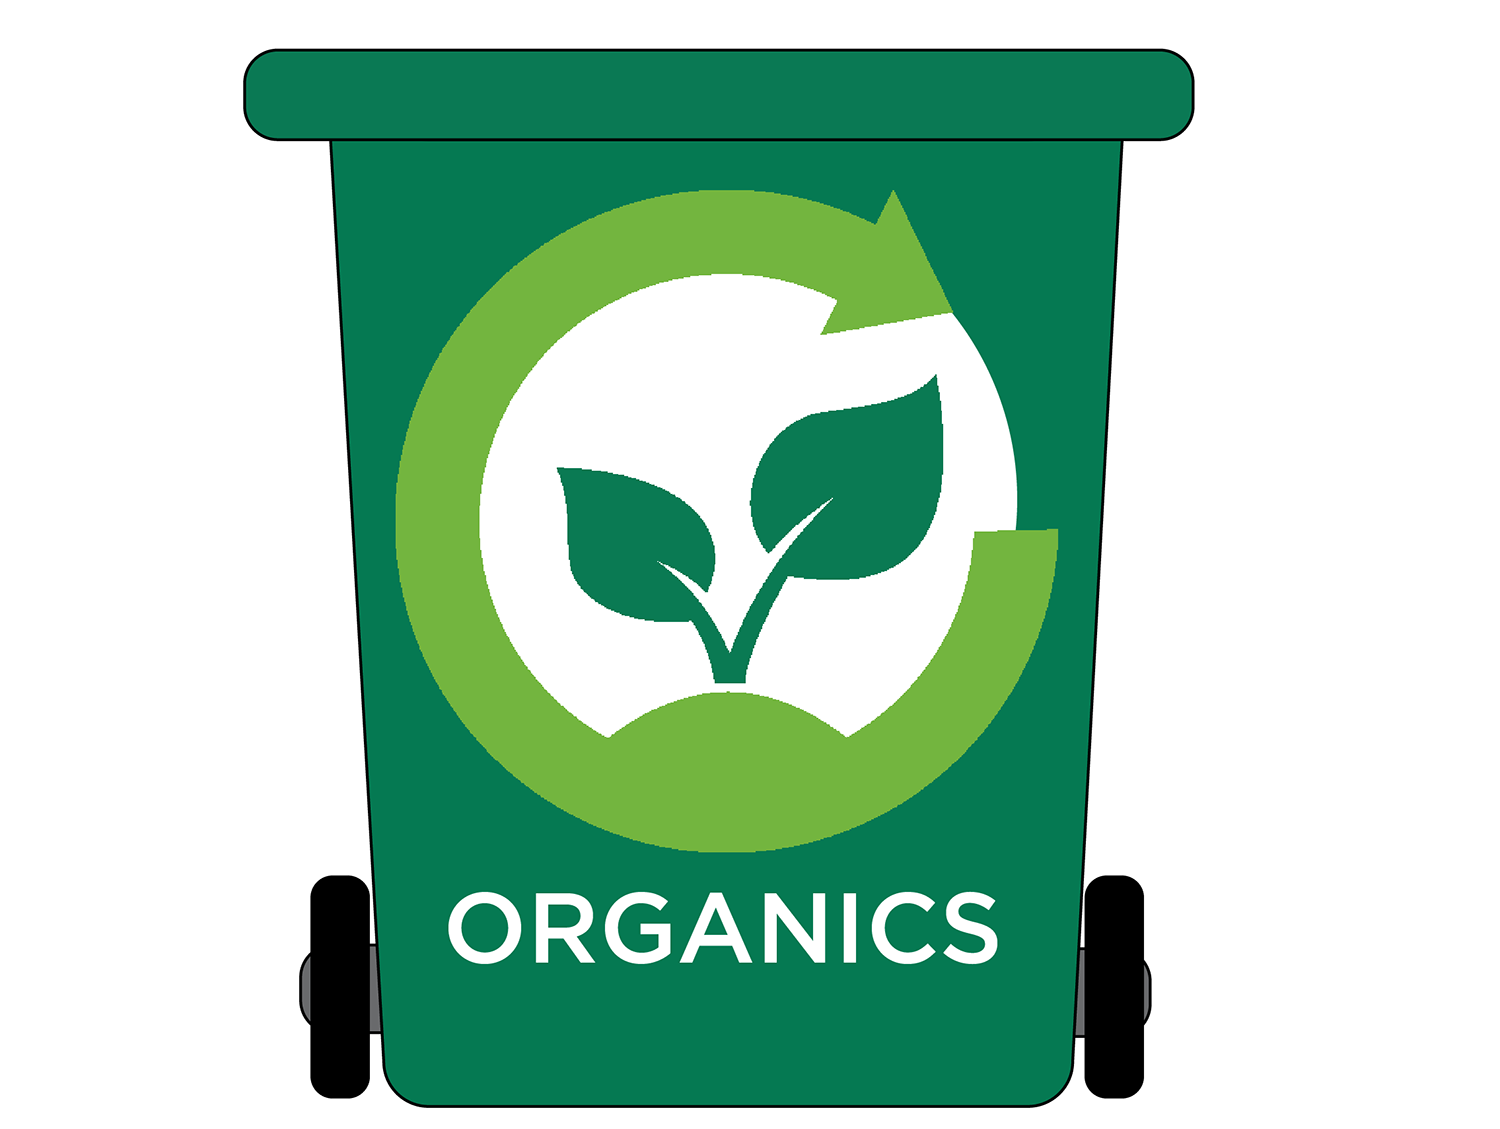 Organics collection/composting bin